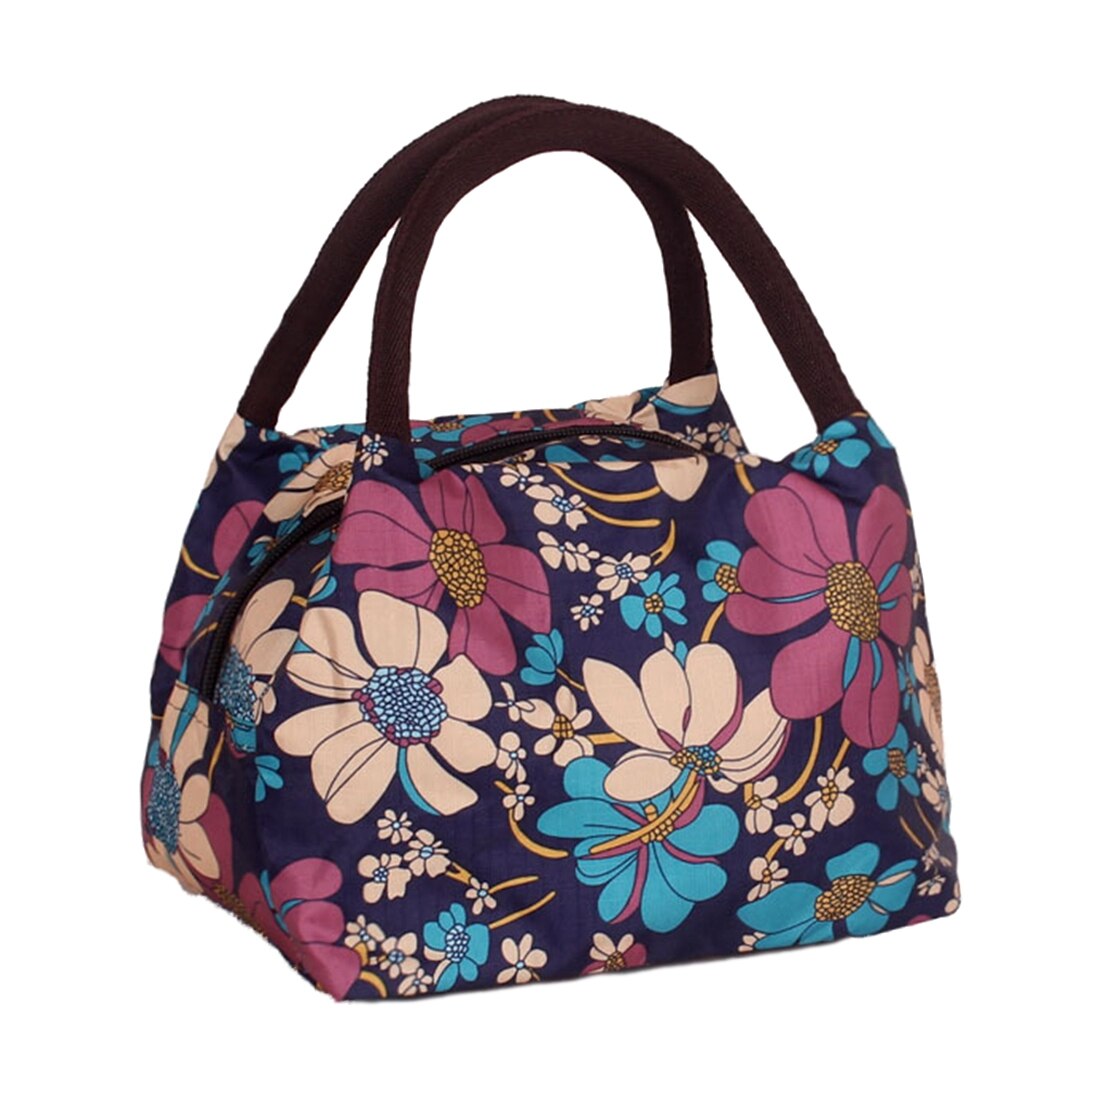 Lady's fashion oxford bag women Handbags lunch shoulder bags for female Messenger Bags - ebowsos